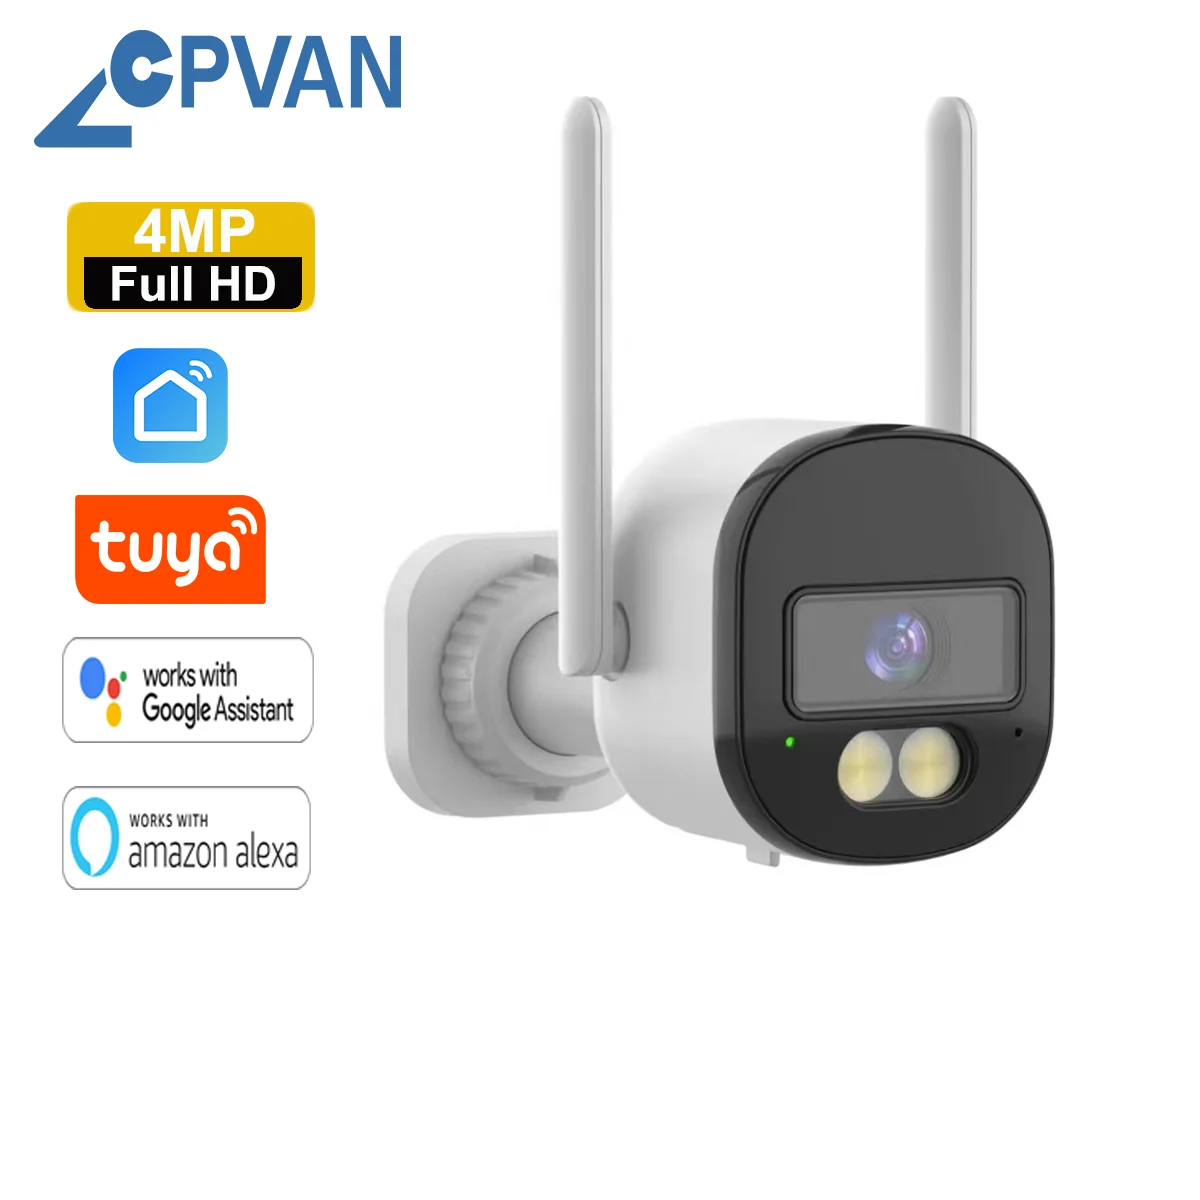 

CPVAN Tuya 2.4G/5G Wireless HD 4MP Camera security Human Detect Video Monitoring Night Vision Smart Outdoor Surveillance Camera